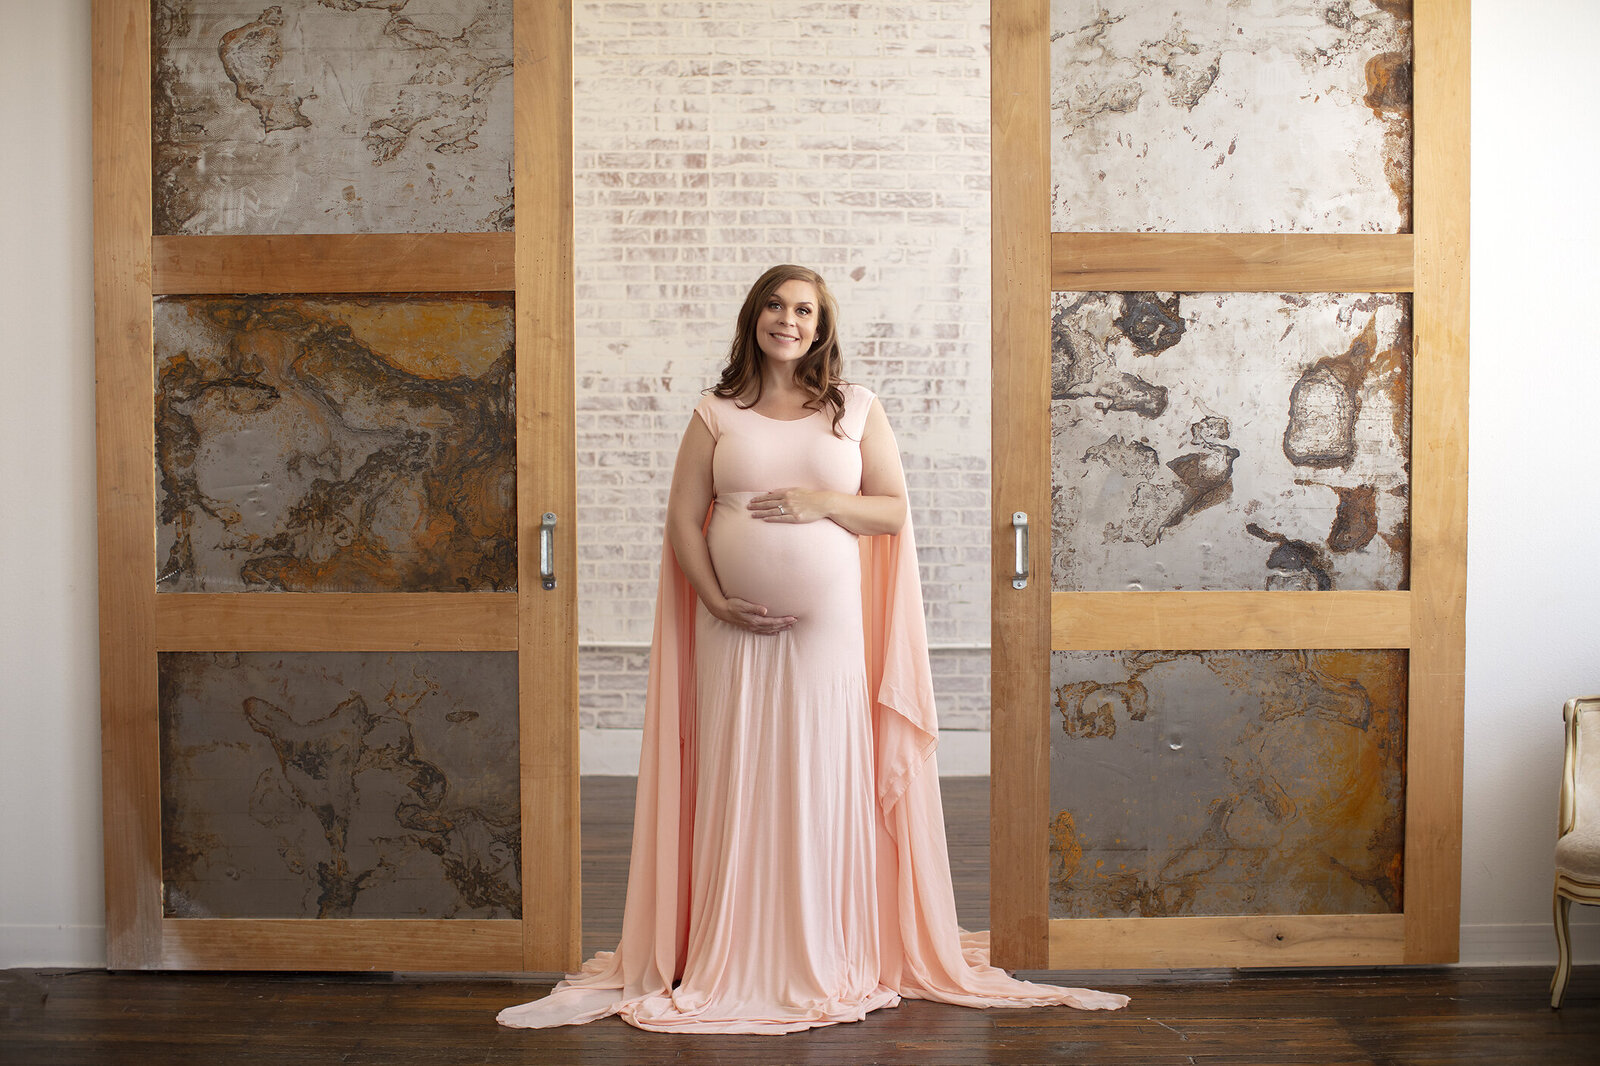 Pregnant woman at downtown Dallas photography studio.